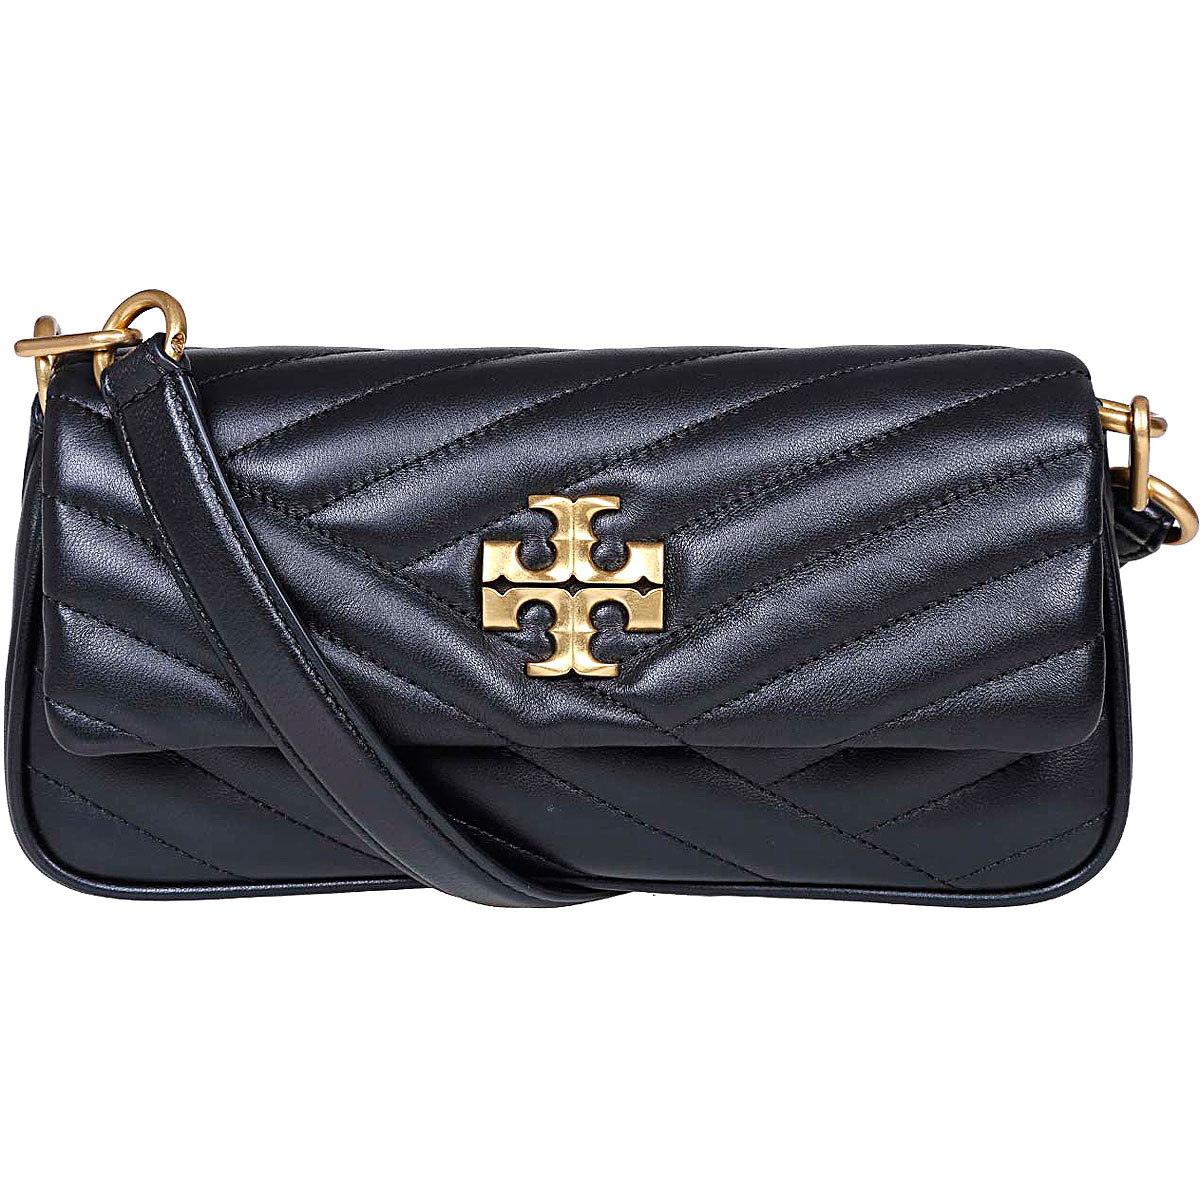 Handbags Tory Burch, Style code: 90456-001-